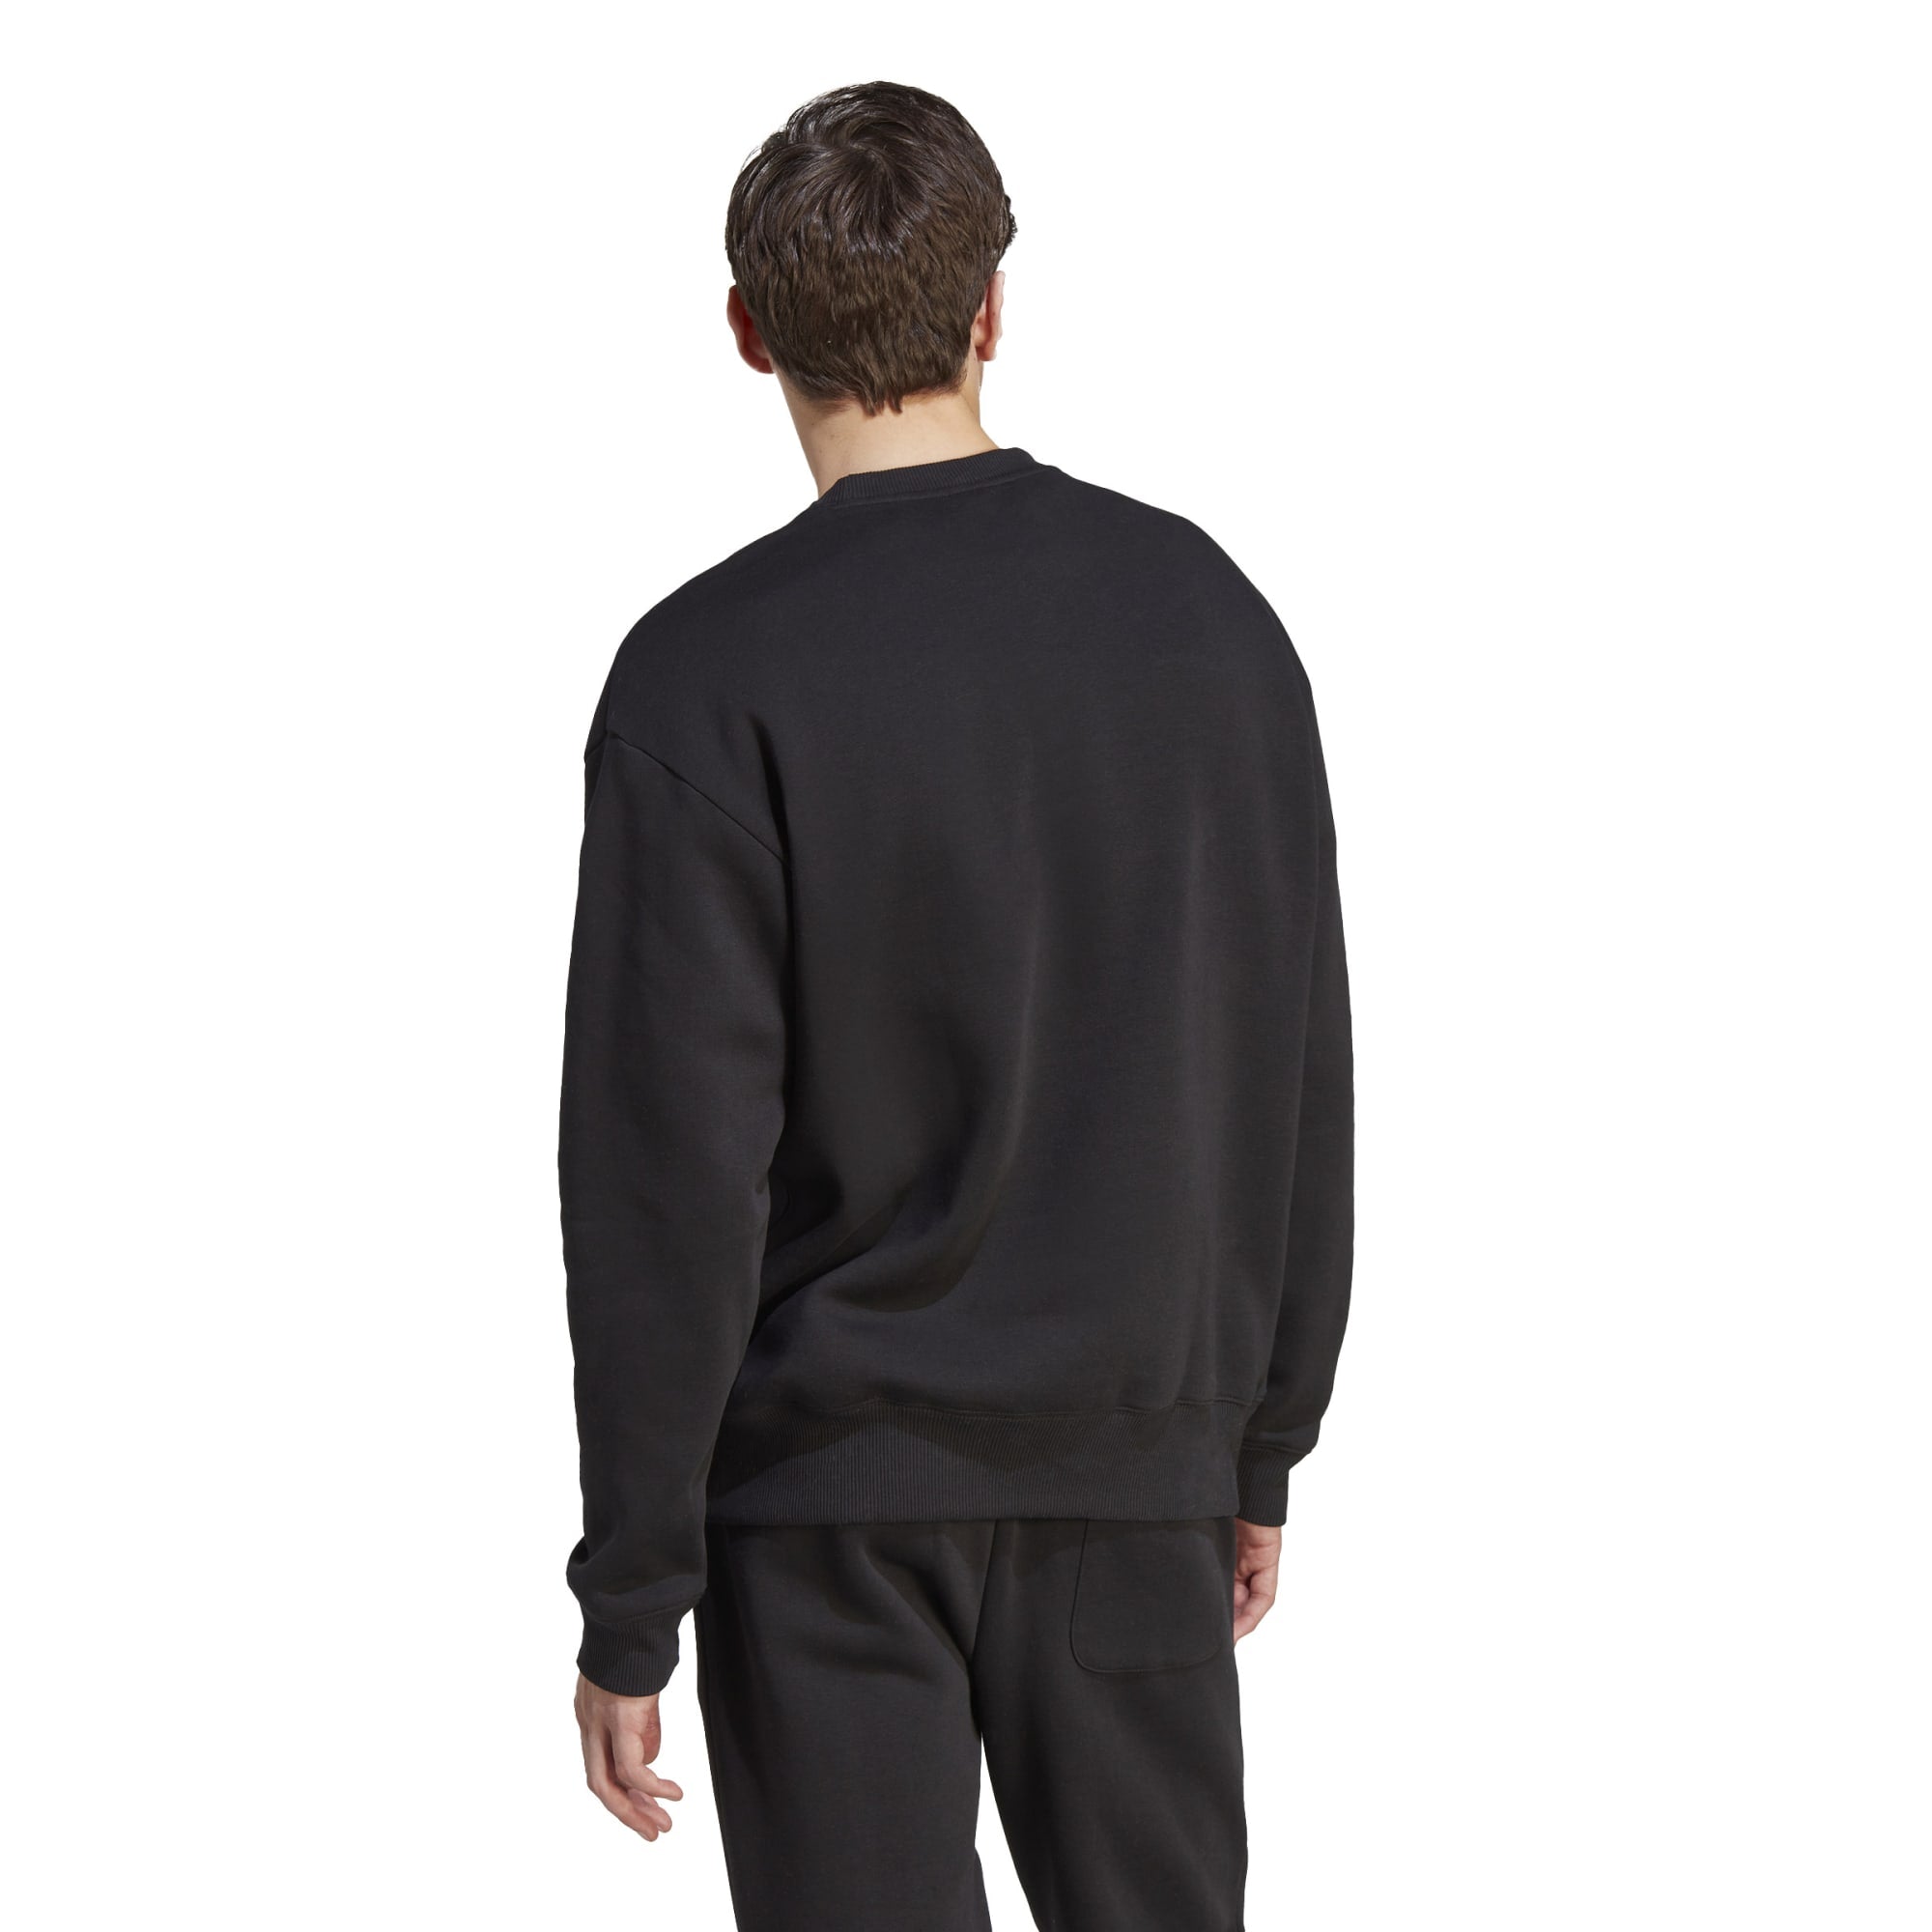 M All Szn Sweater - Black